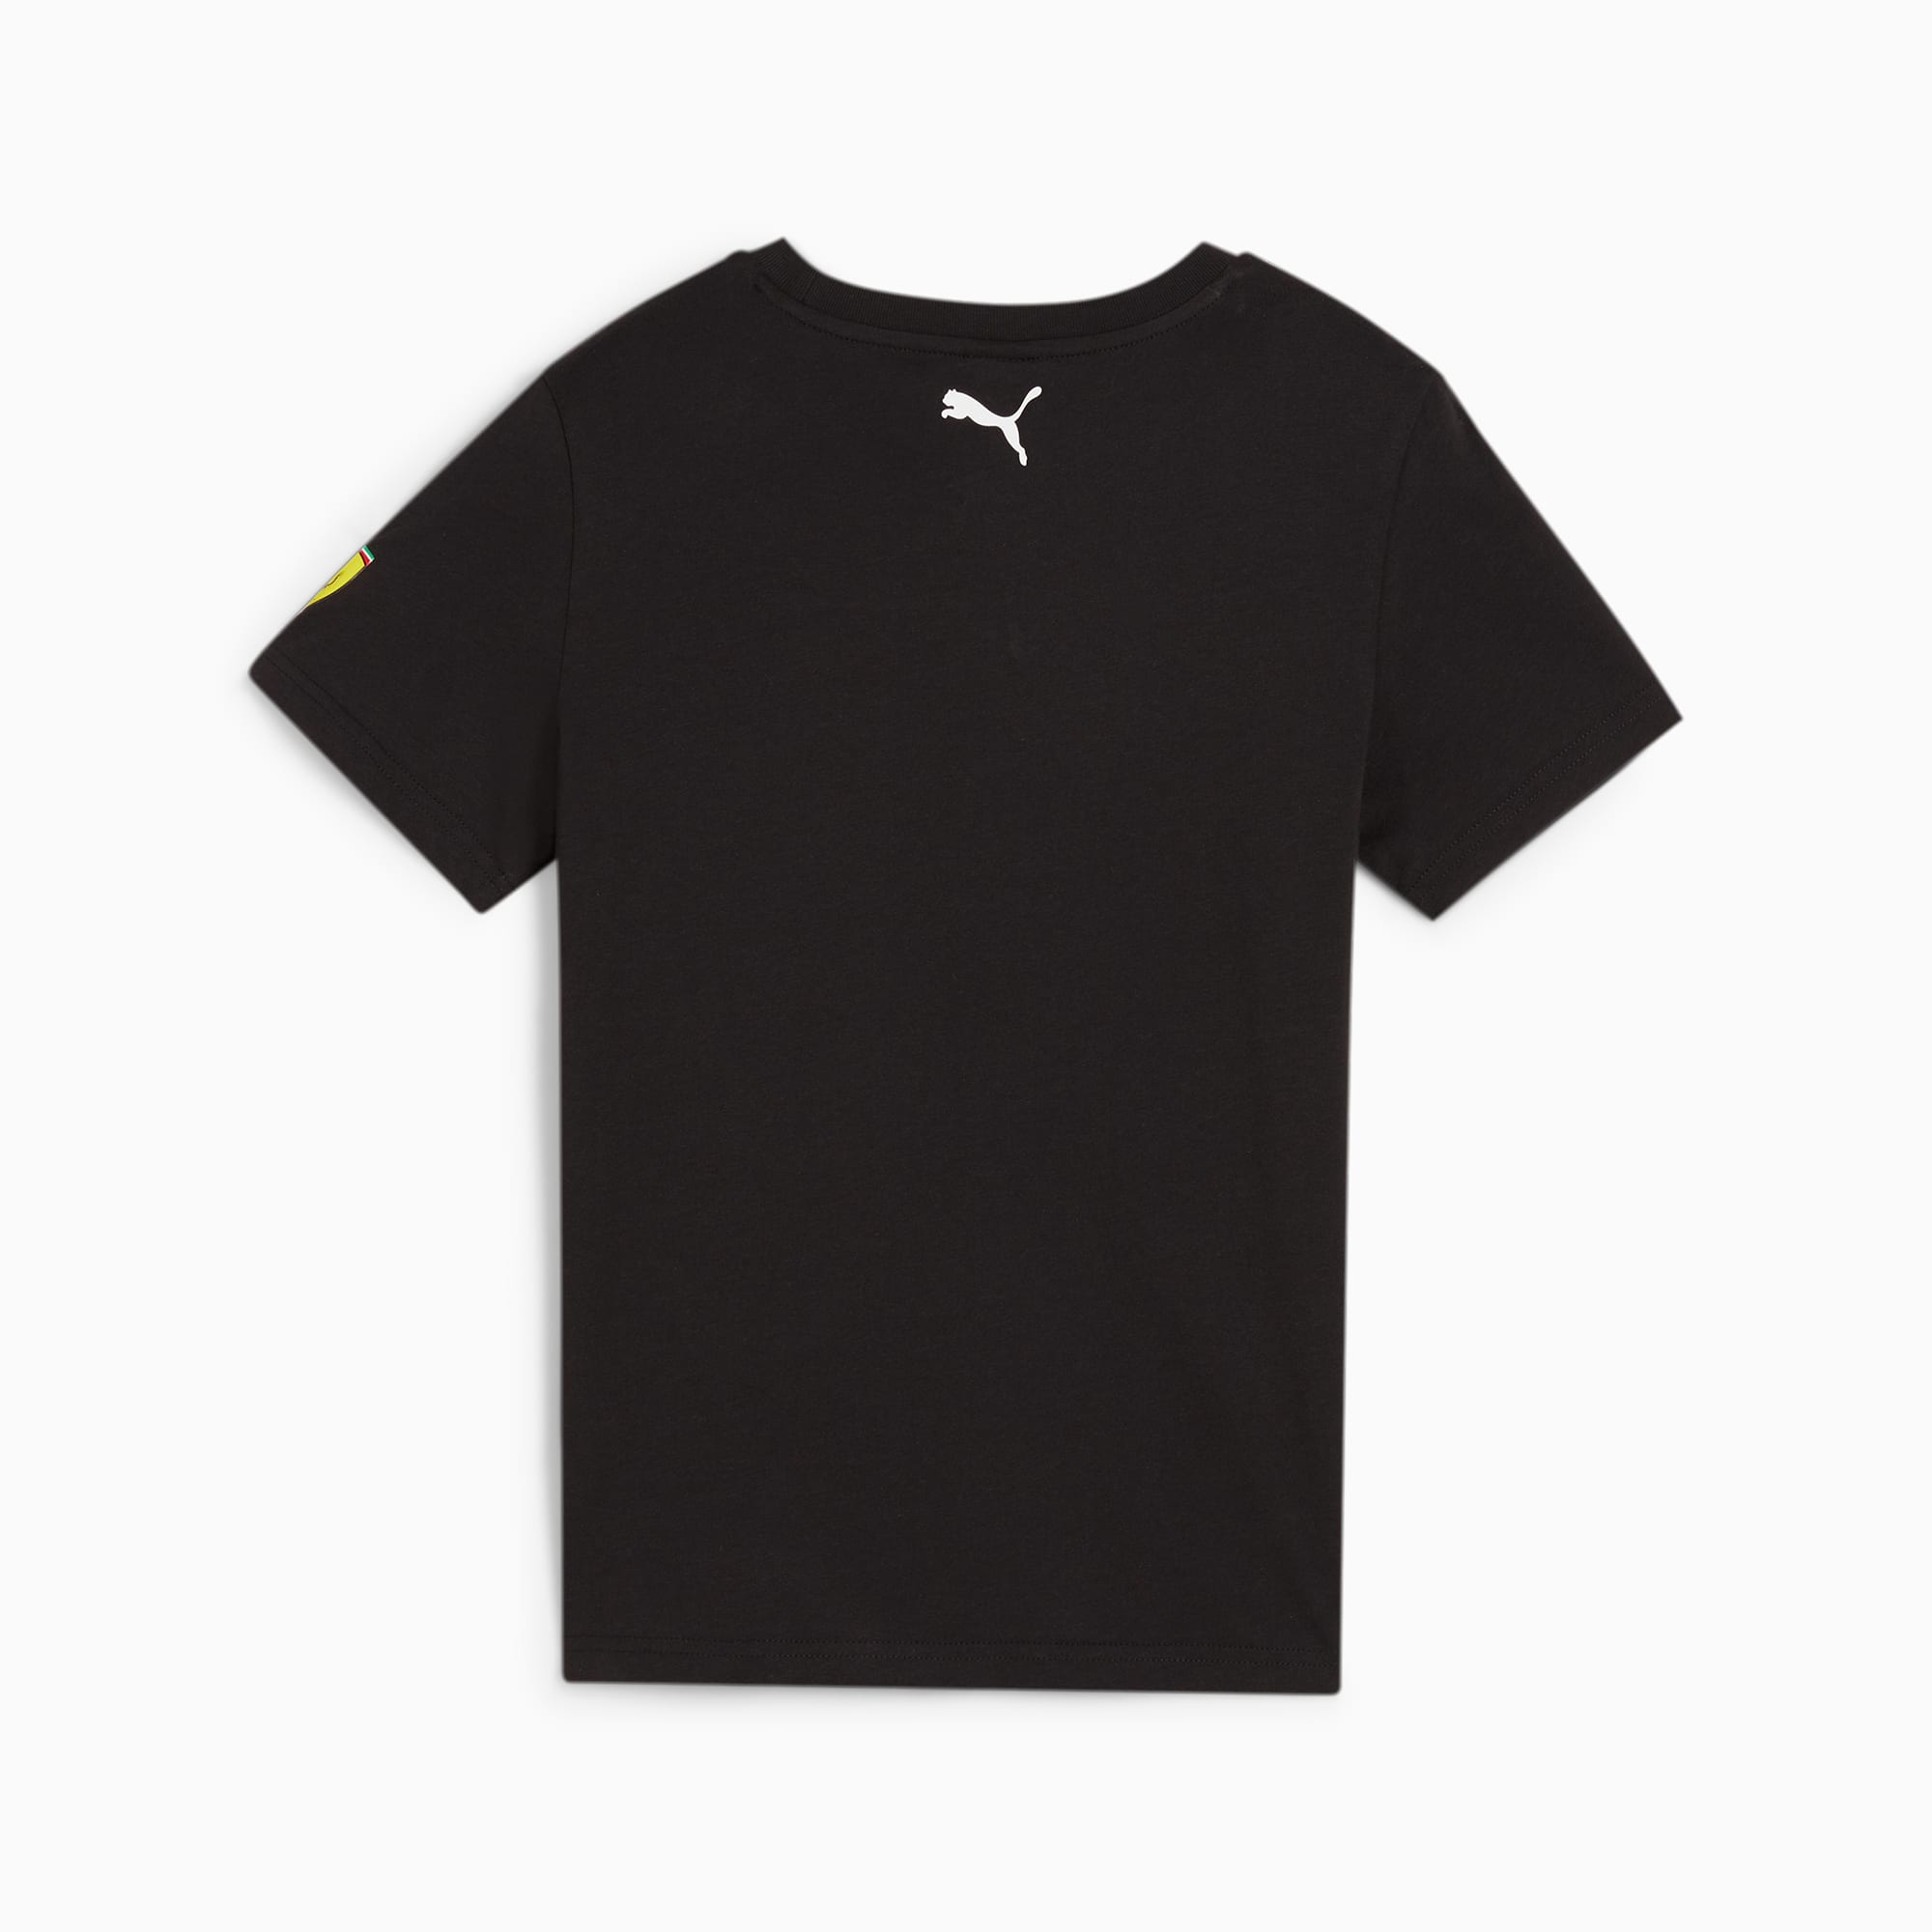 PUMA Scuderia Ferrari Race Youth Motorsport Graphic T-Shirt, Black, Size 116, Clothing